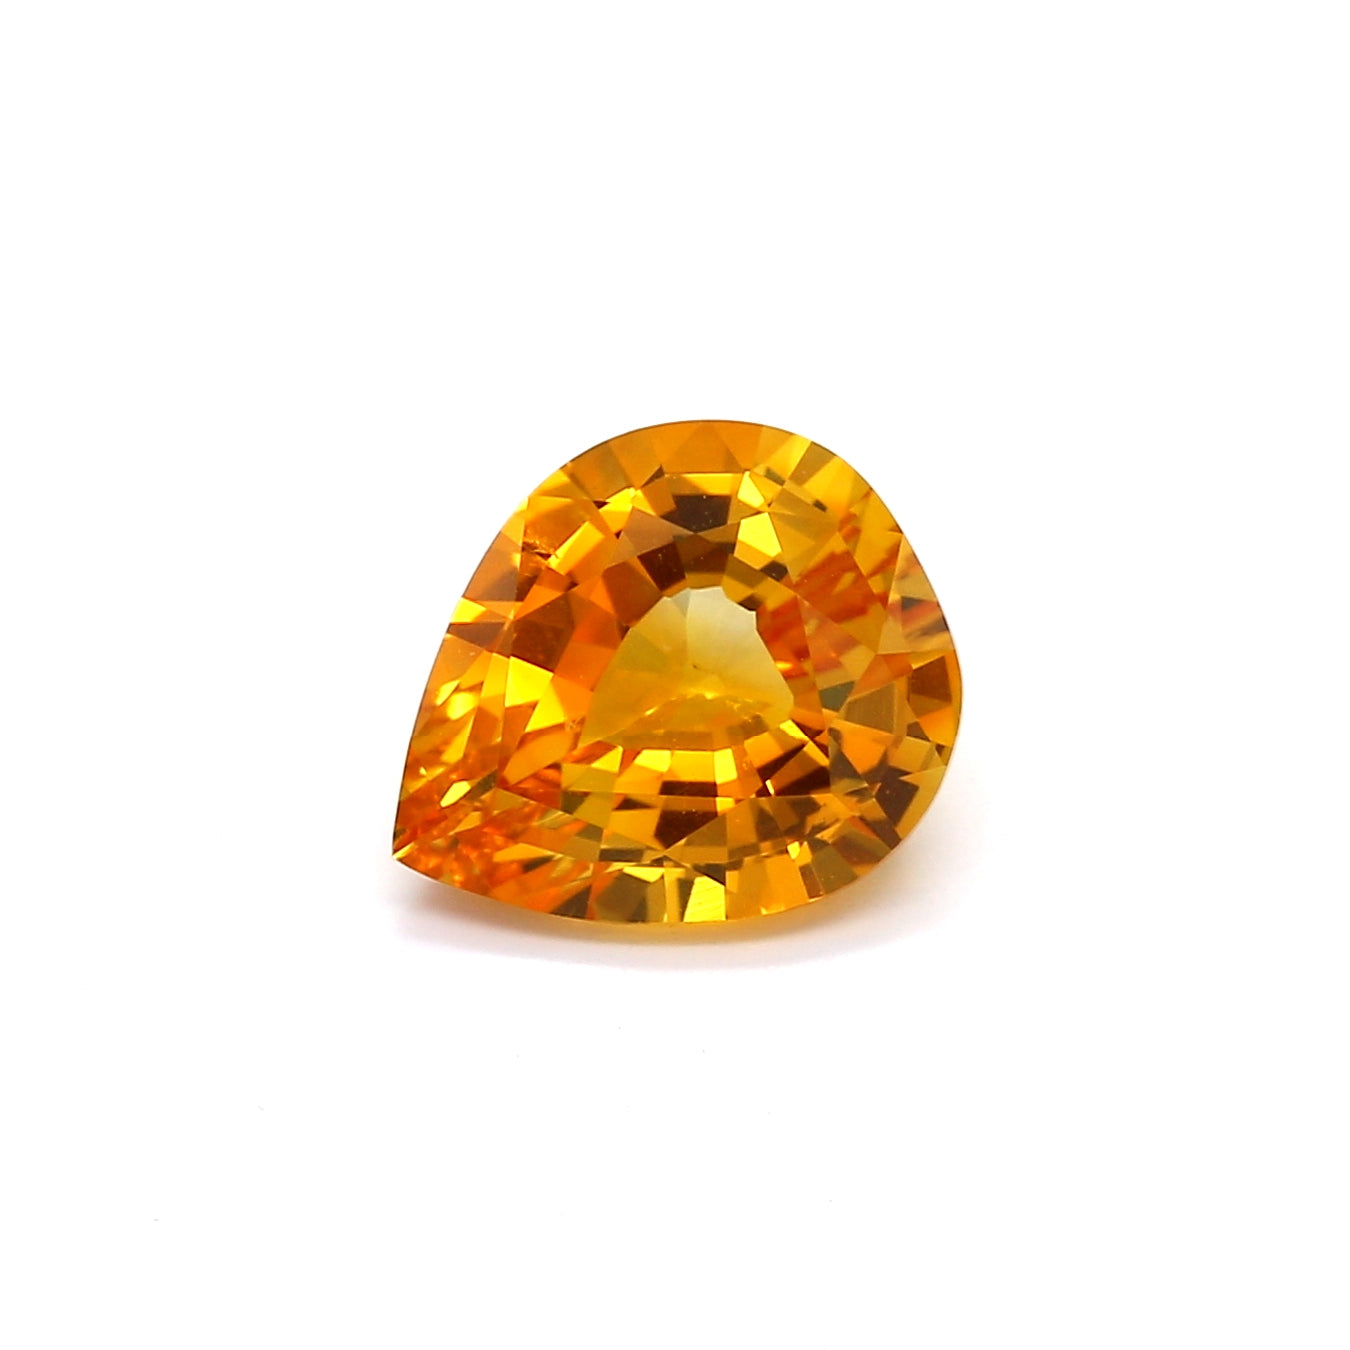 3.40ct Orangy Yellow, Pear Shape Sapphire, Heated, Sri Lanka - 10.50 x 8.80 x 4.89mm